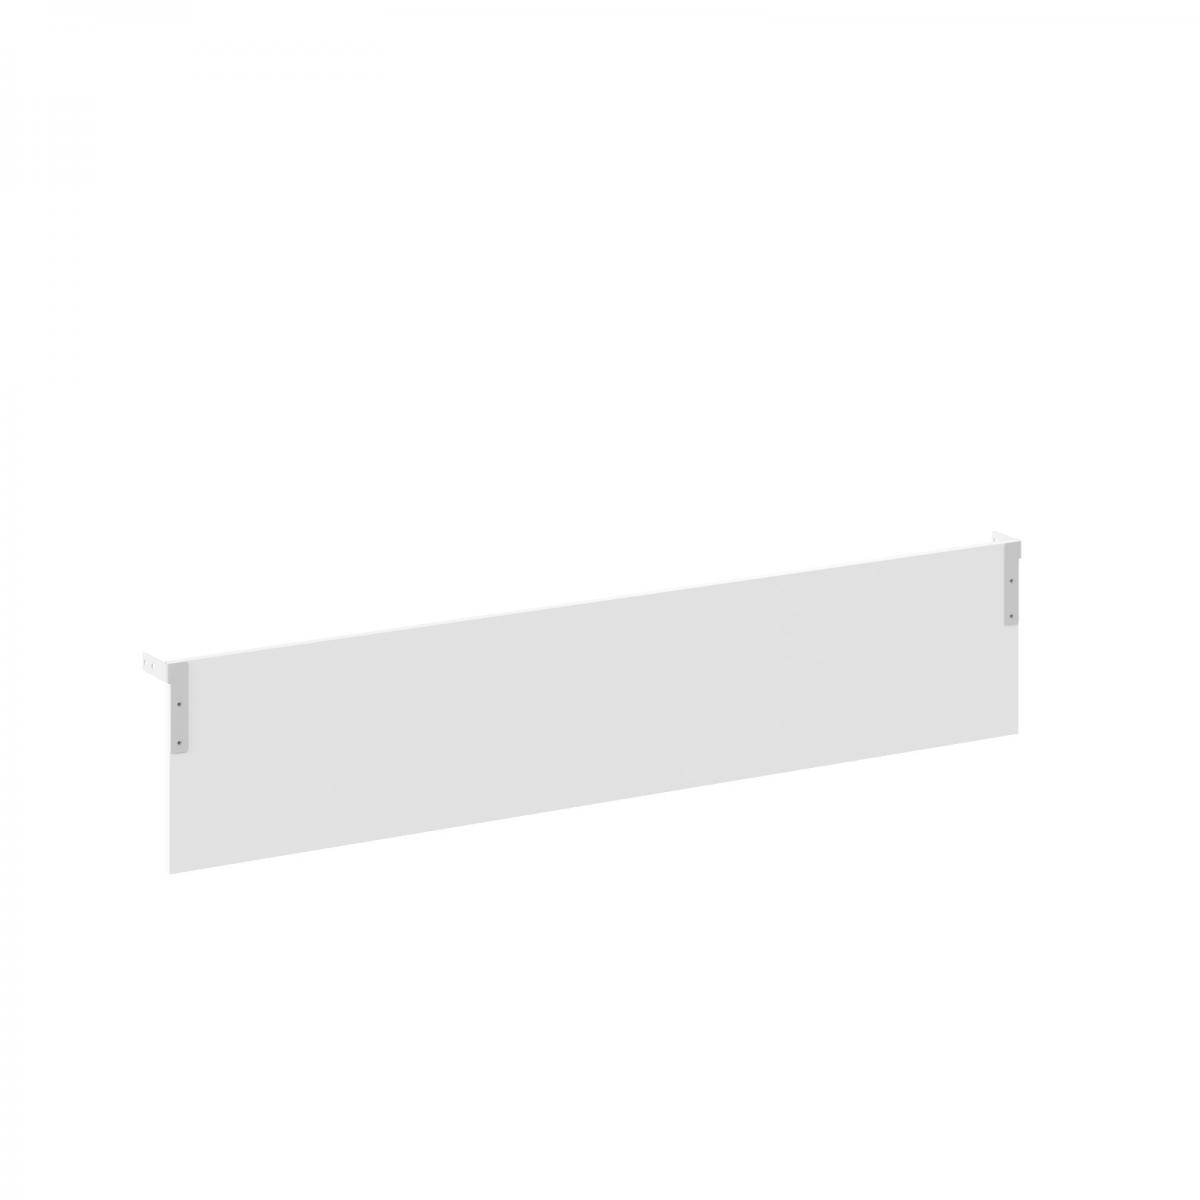 Фронтальная панель подвесная XDST 187 Белый/Белый 1700х350х18 XTEN-S